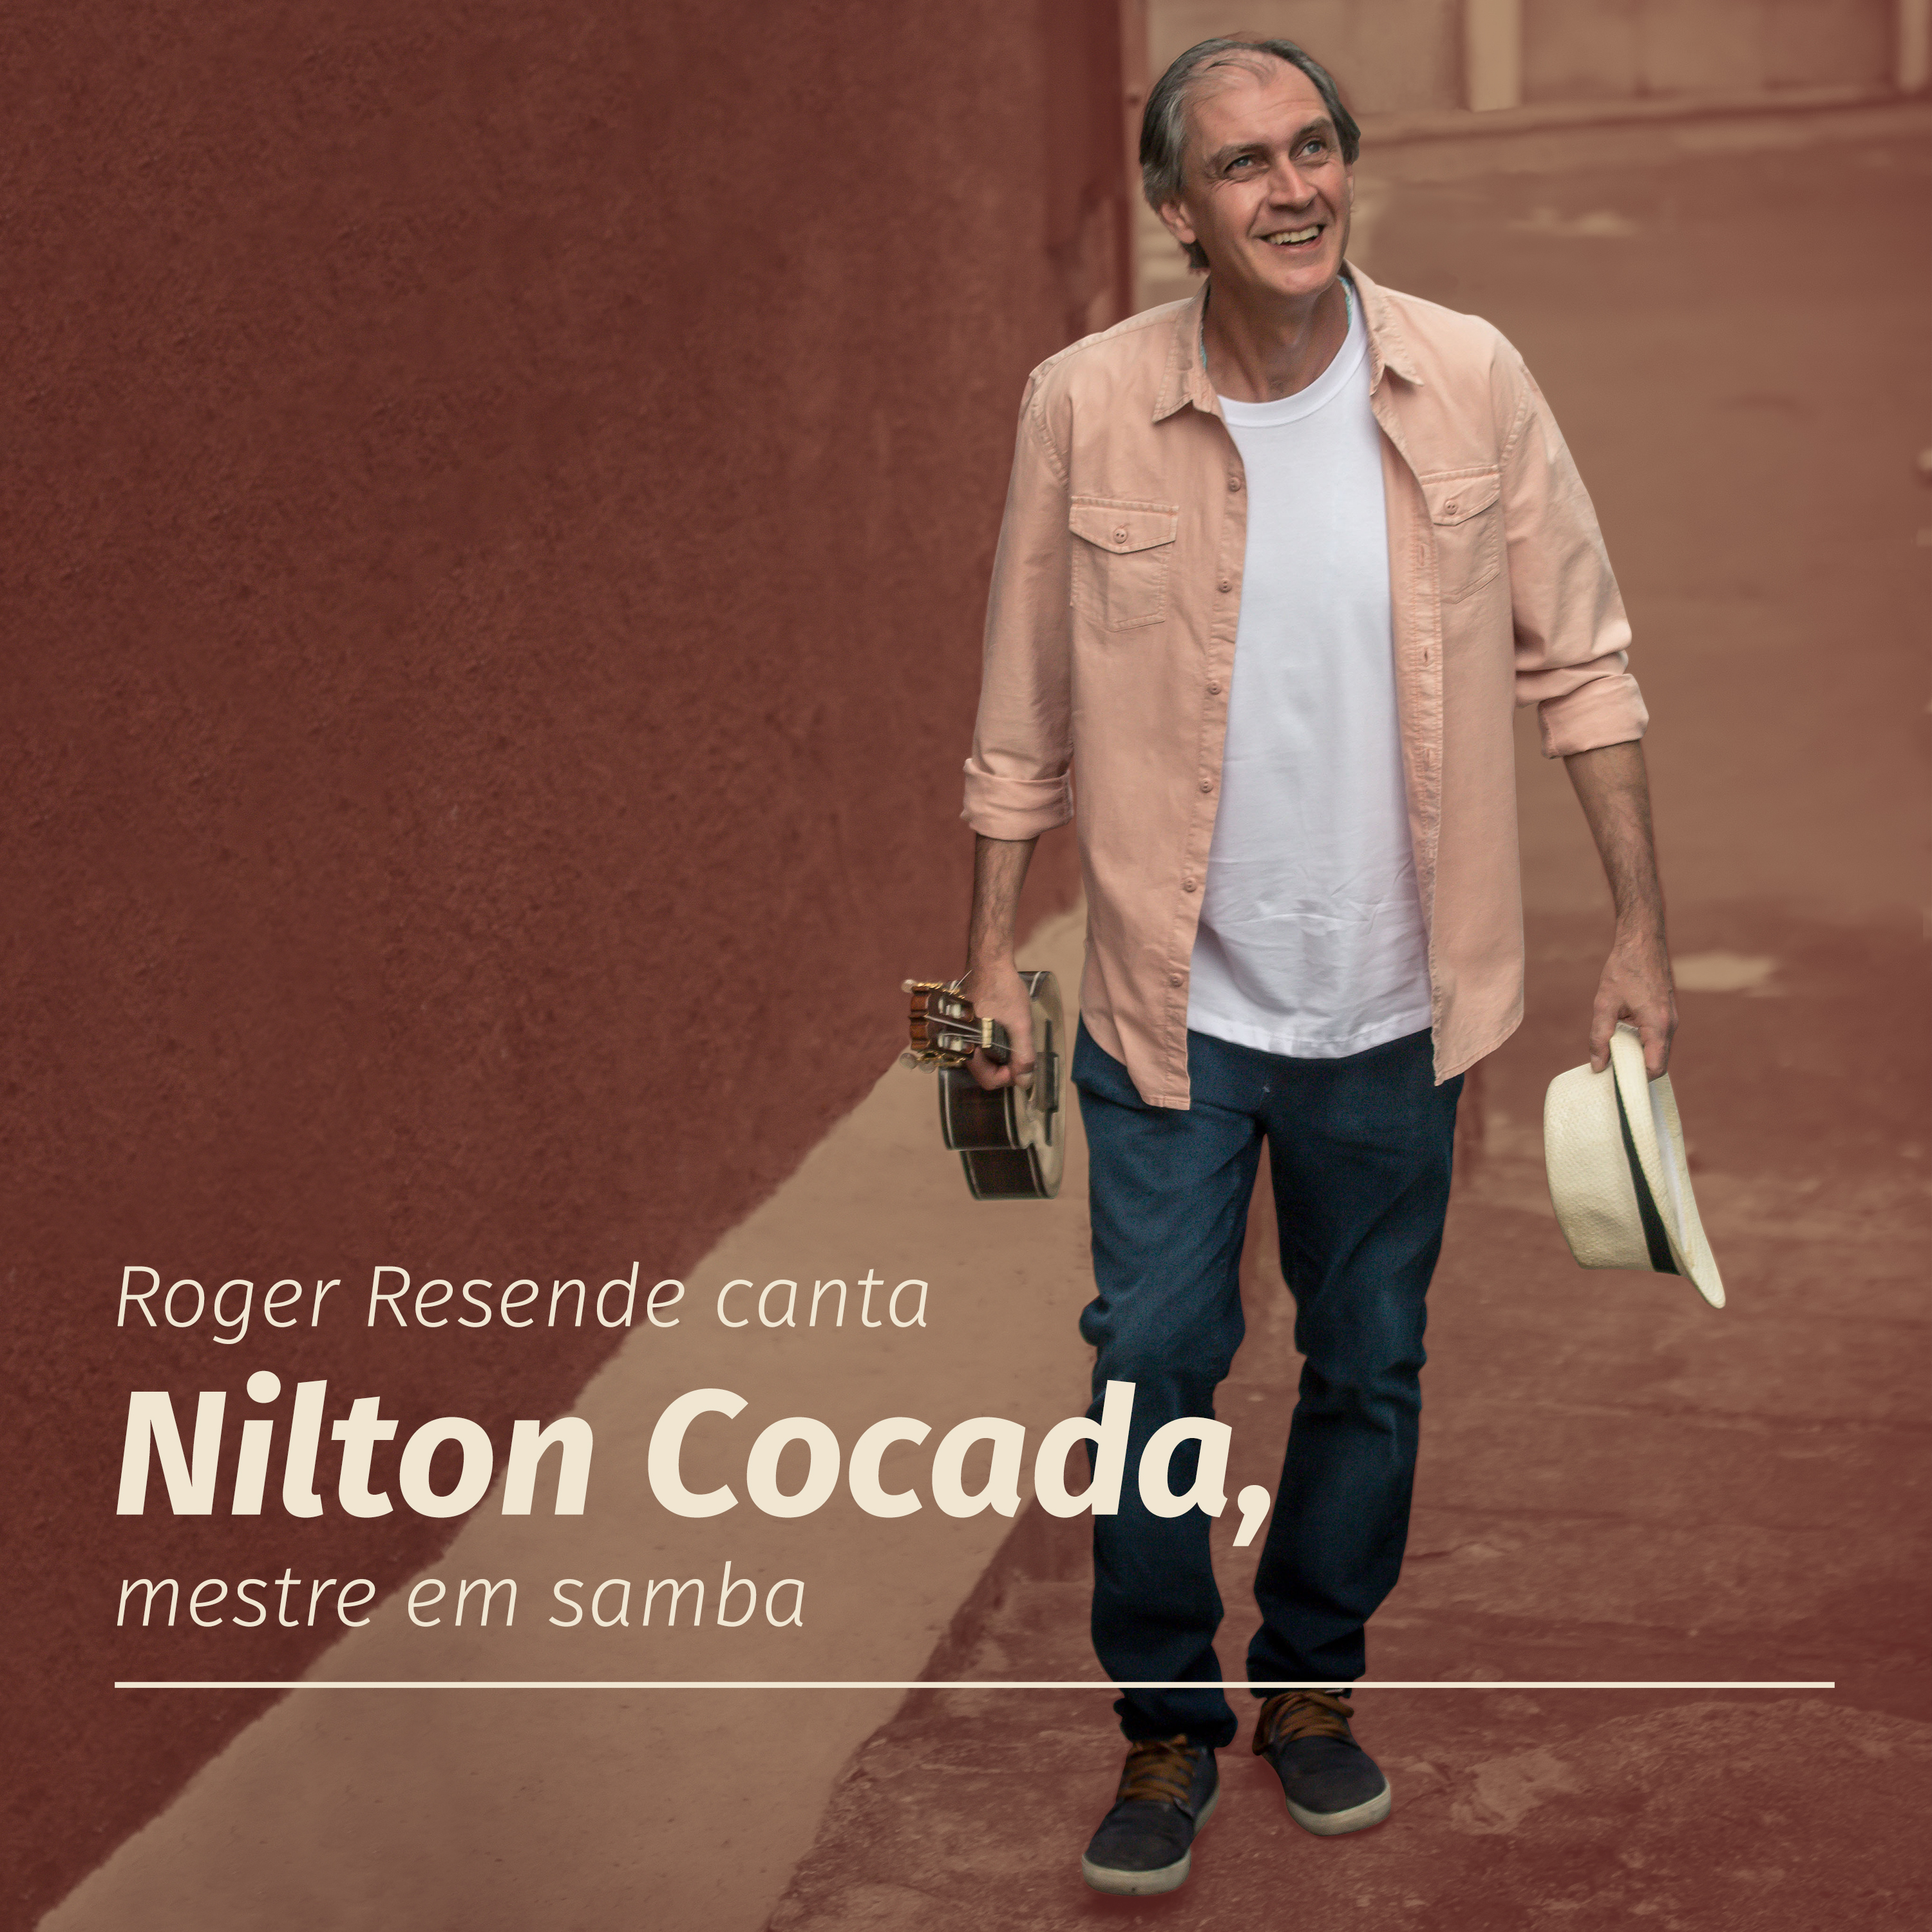 Roger Resende Canta Nilton Cocada, Mestre em Samba